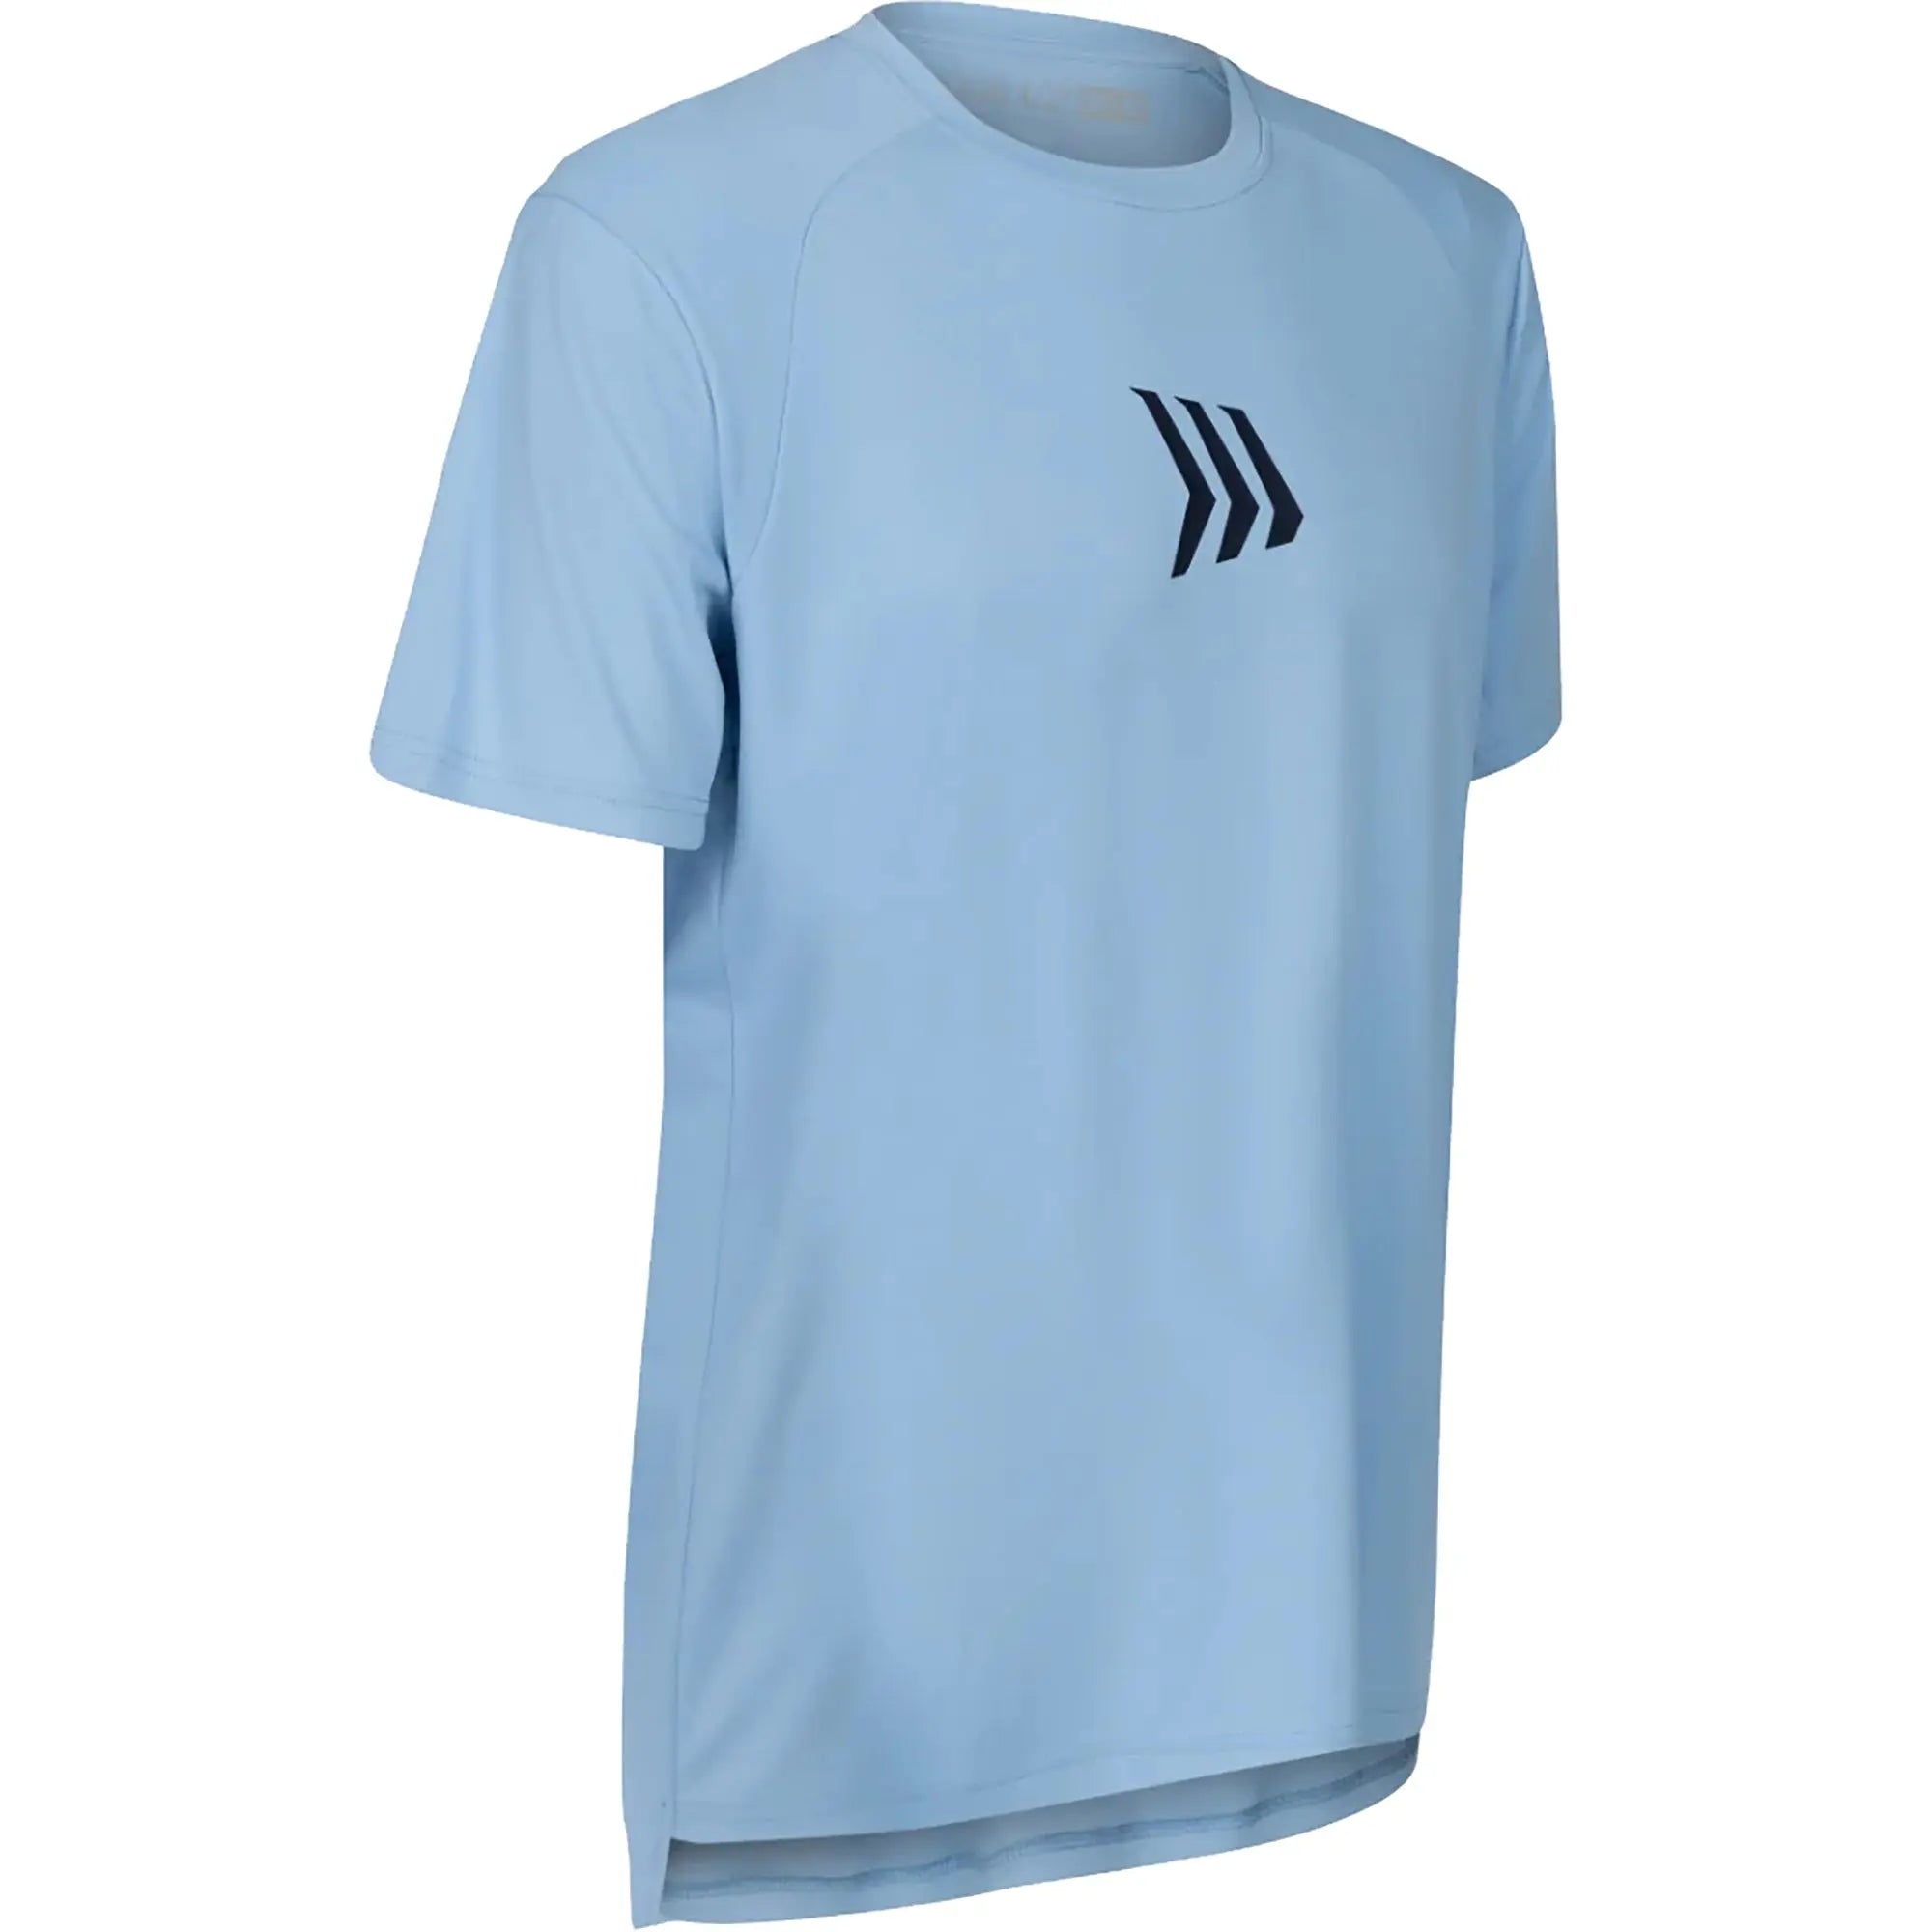 Gillz Pro Series UV T-Shirt